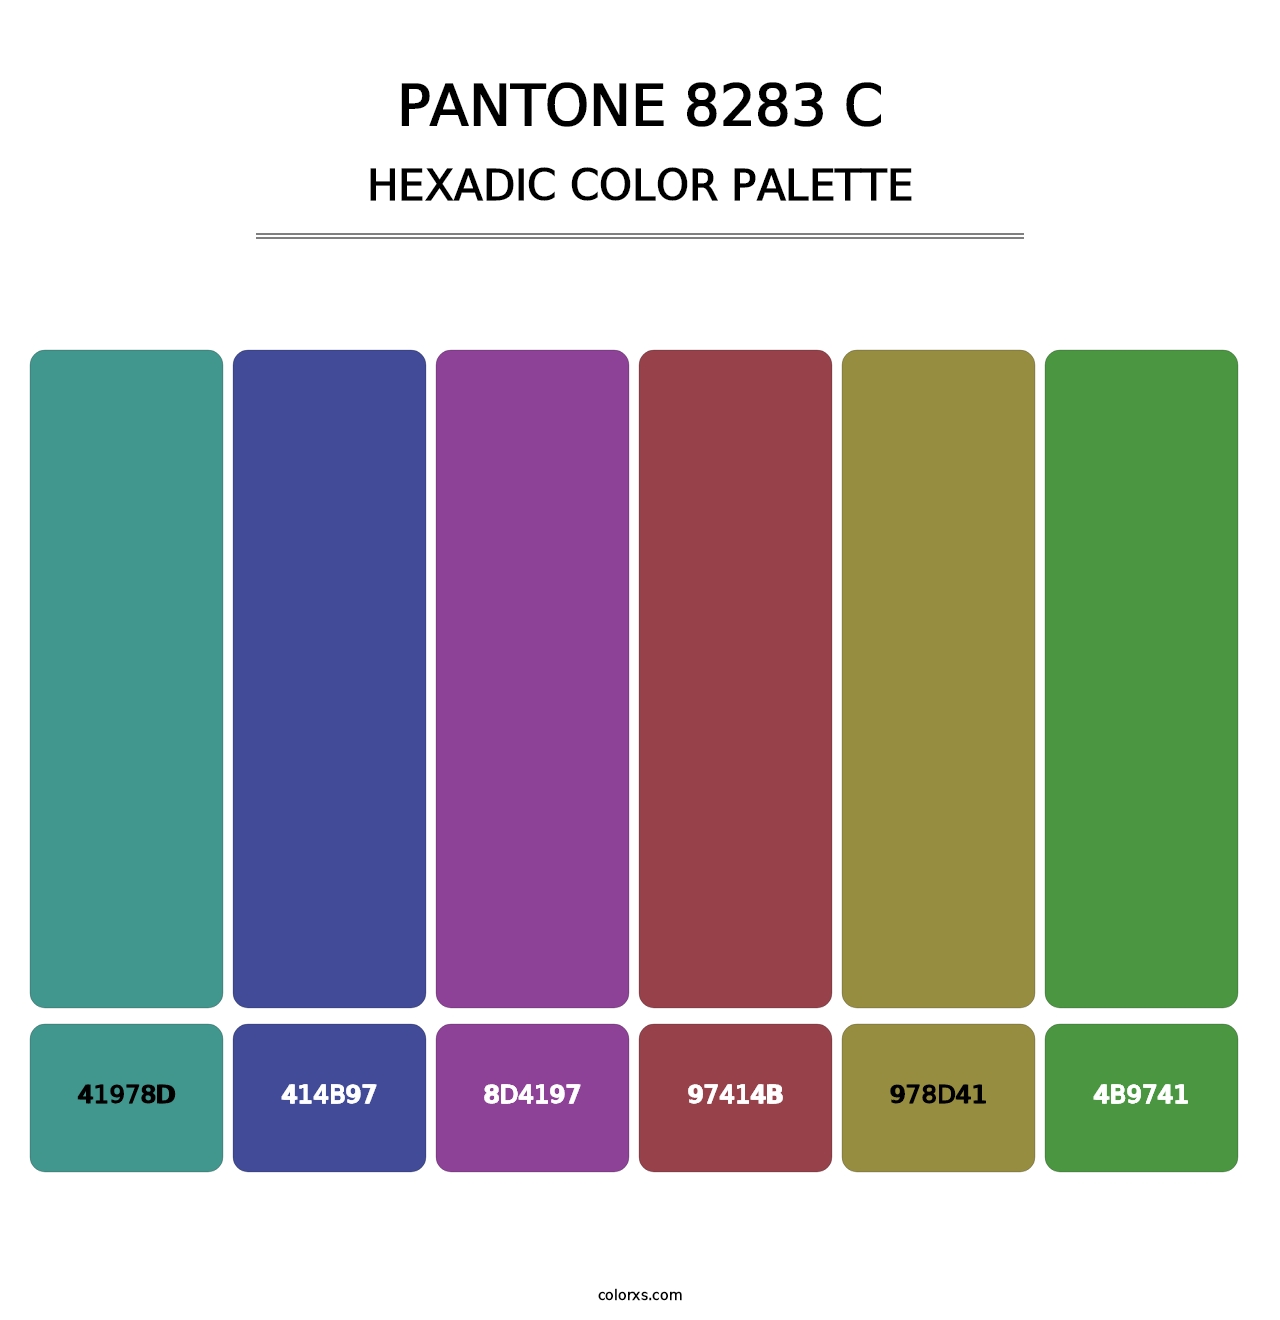 PANTONE 8283 C - Hexadic Color Palette